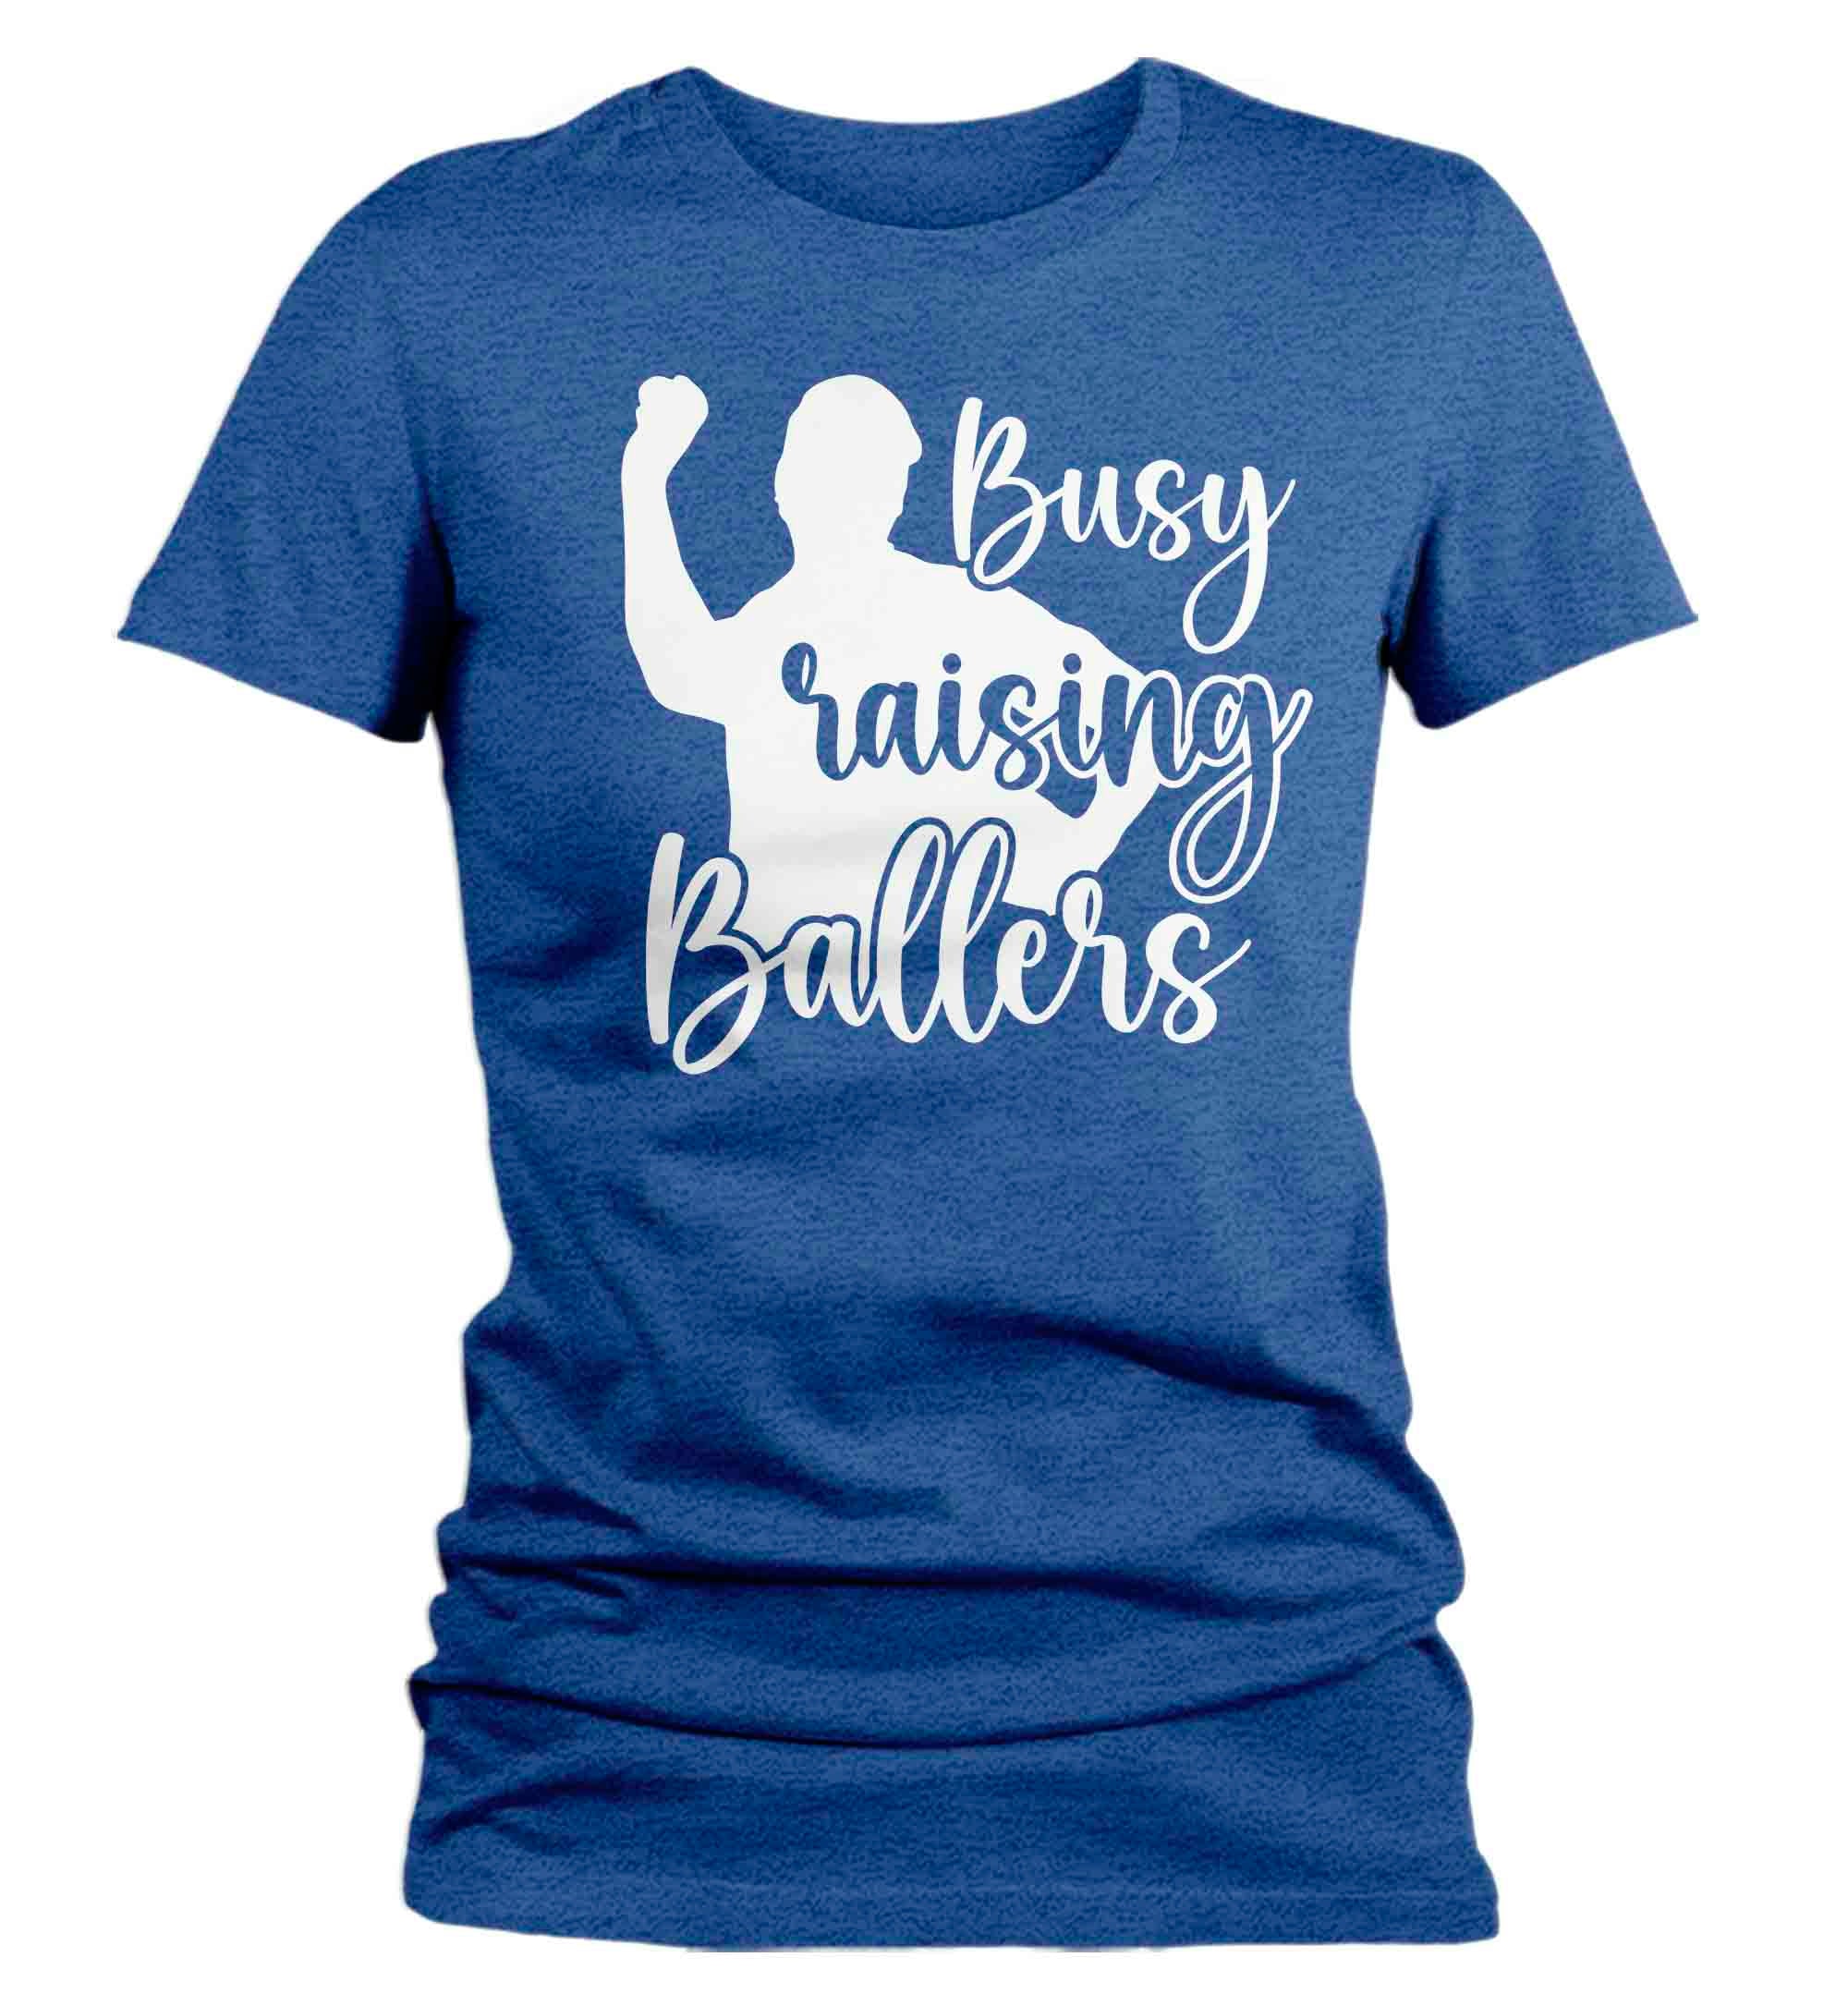 Women's Funny Baseball Mom T Shirt Busy Raising Ballers Shir